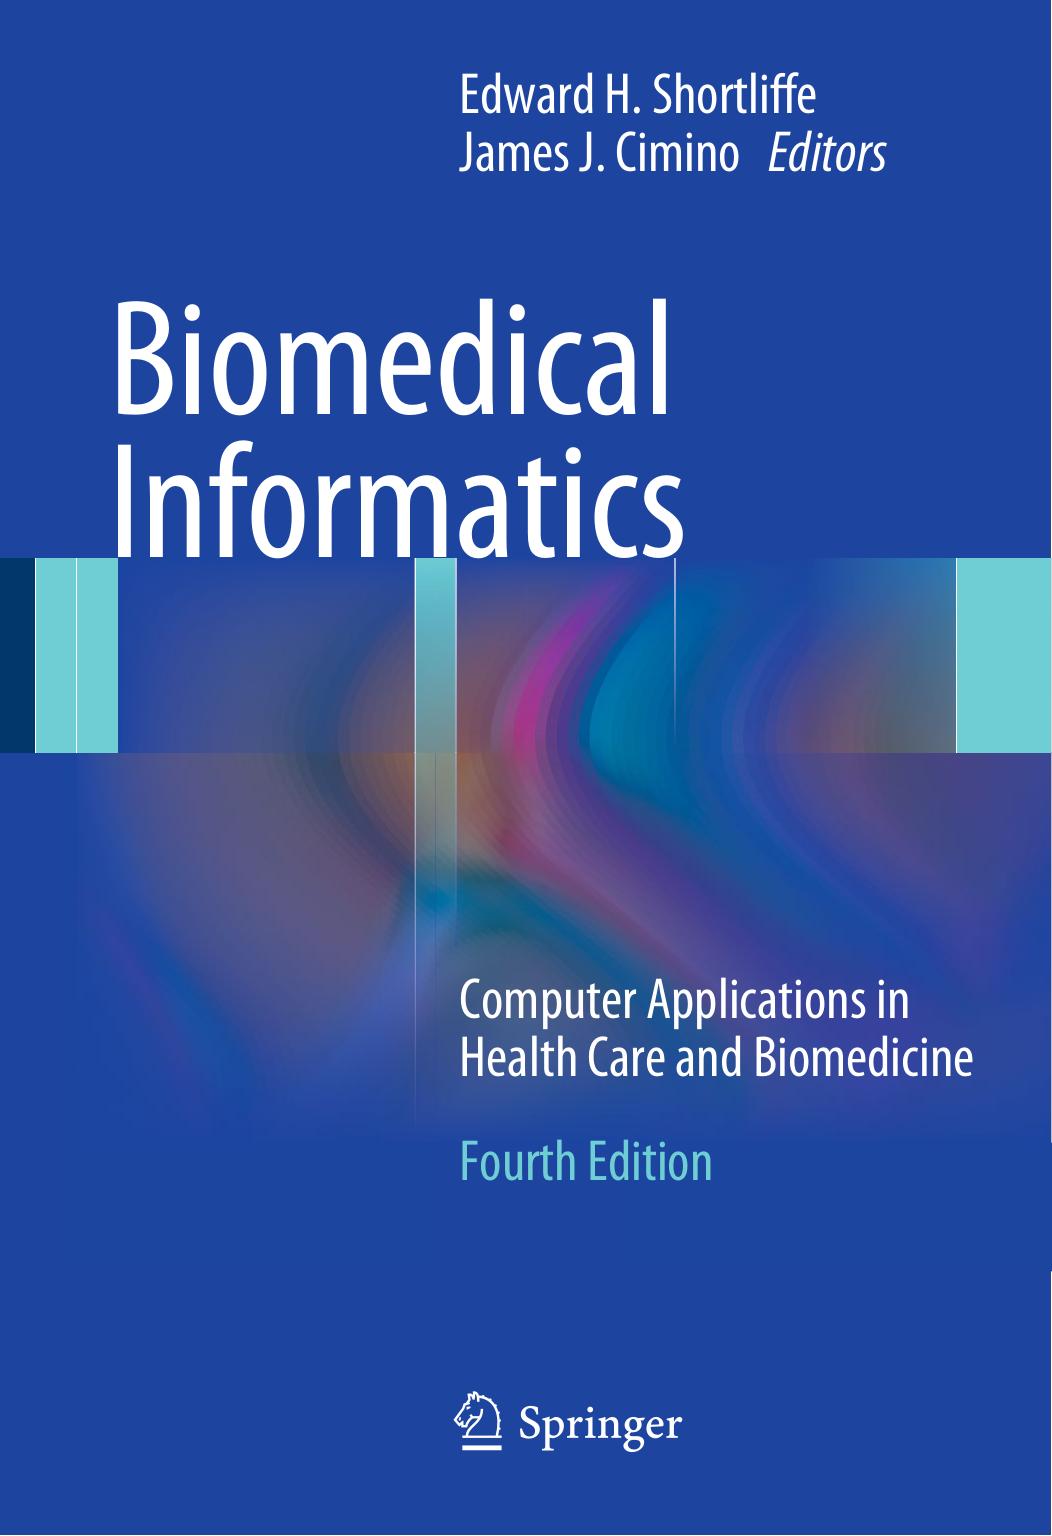 Biomedical Informatics by Edward H. Shortliffe & James J. Cimino